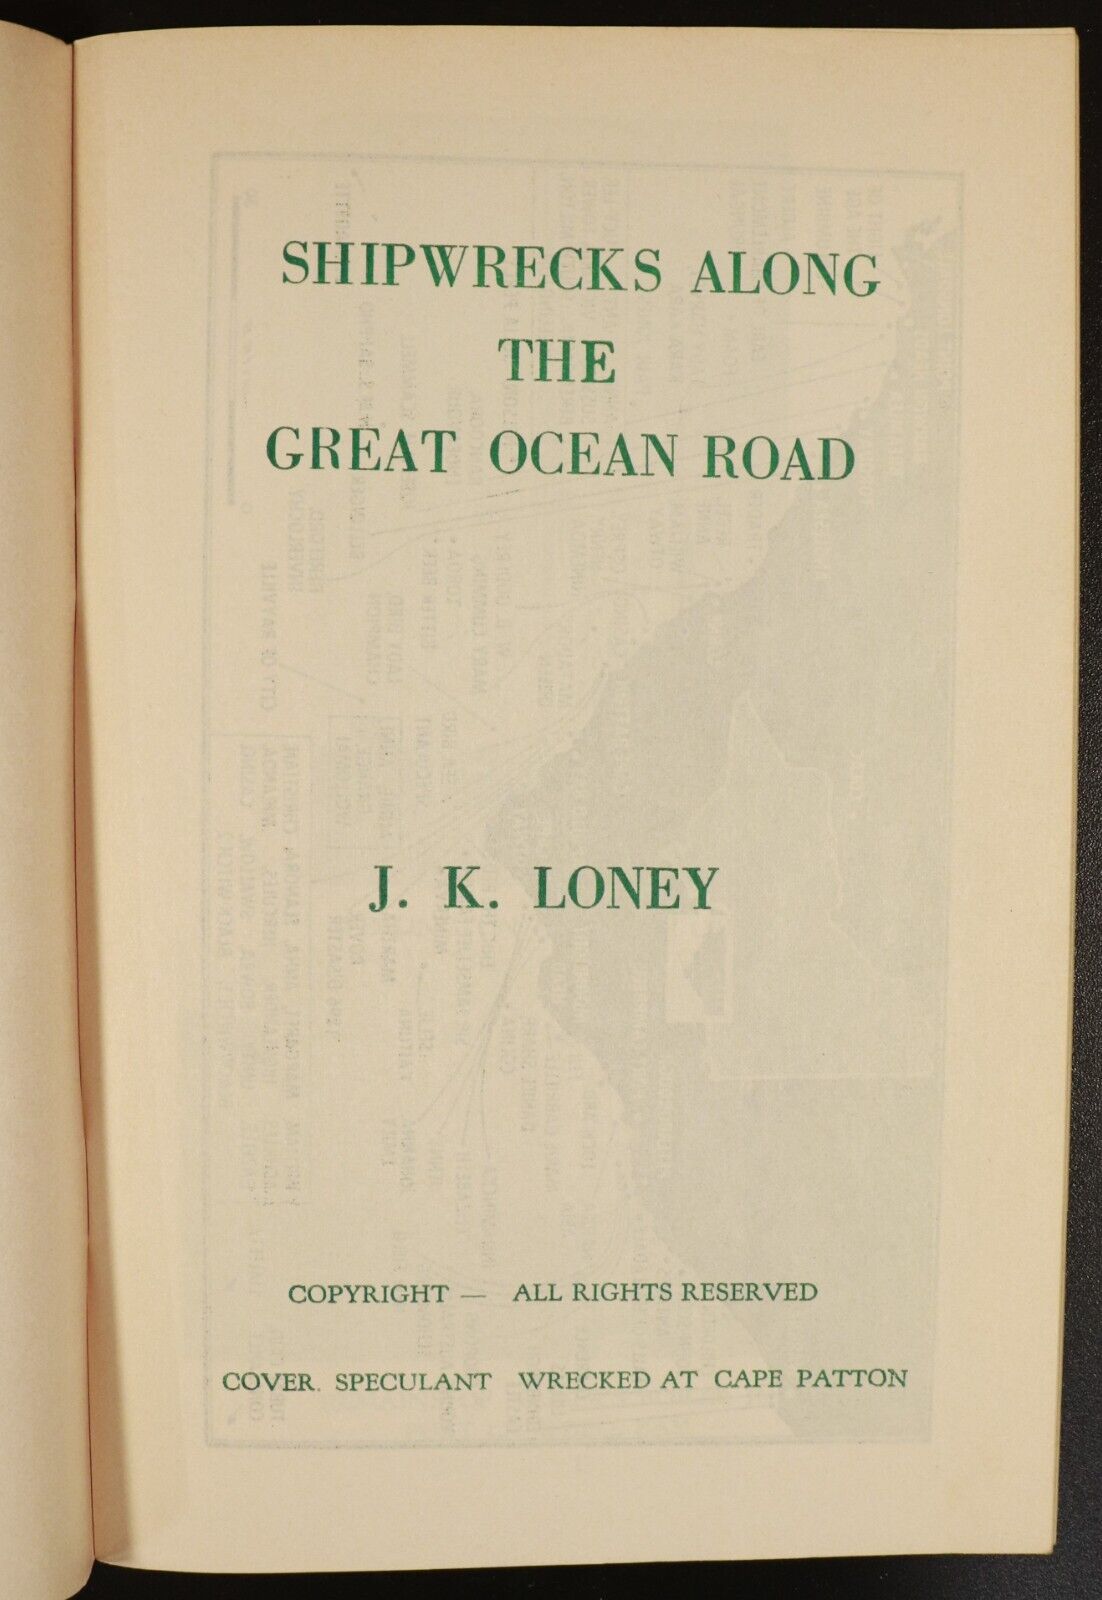 1967 Shipwrecks Along The Great Ocean Road Australian Maritime History Book - 0